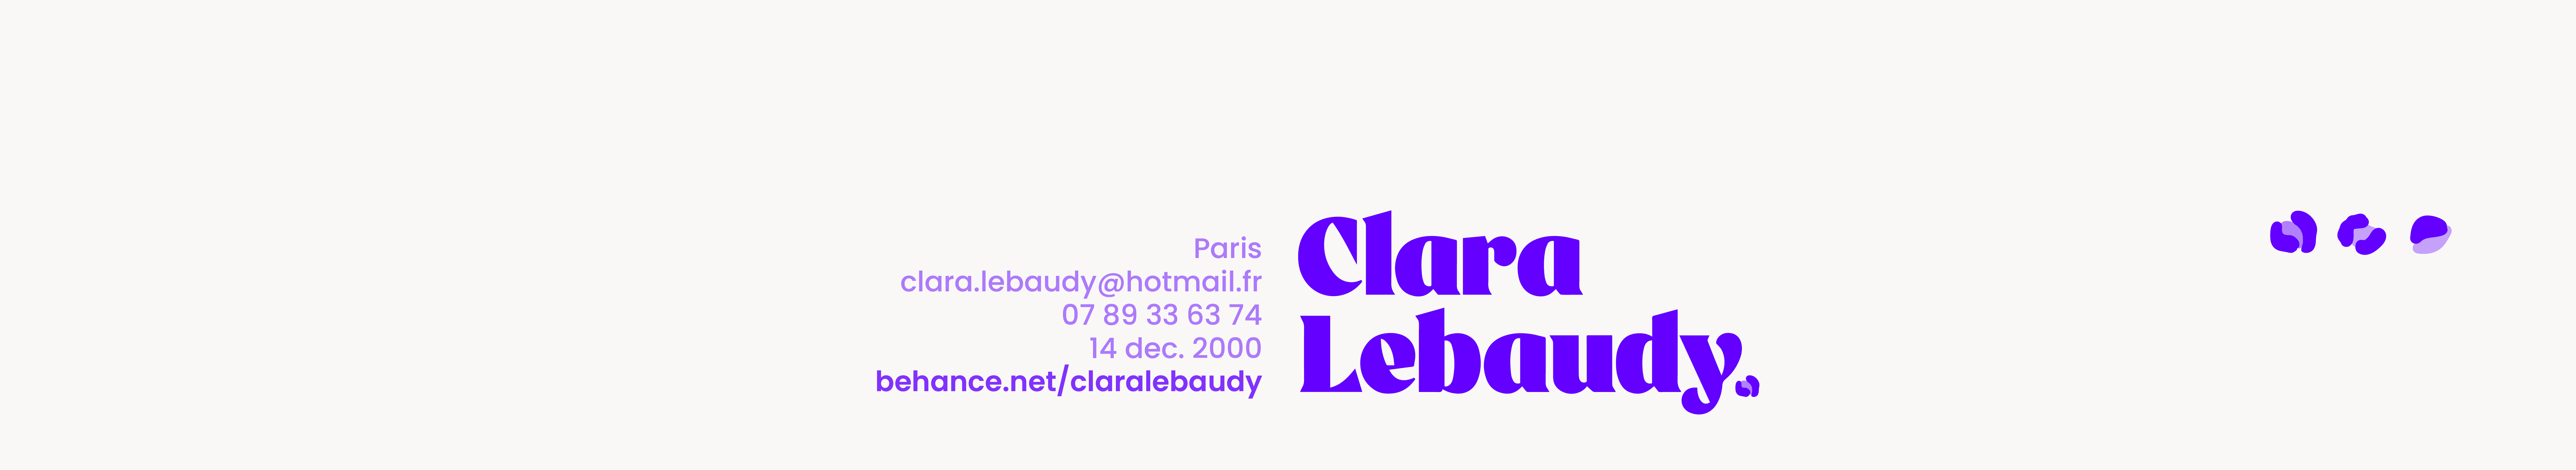 Clara LEBAUDY's profile banner